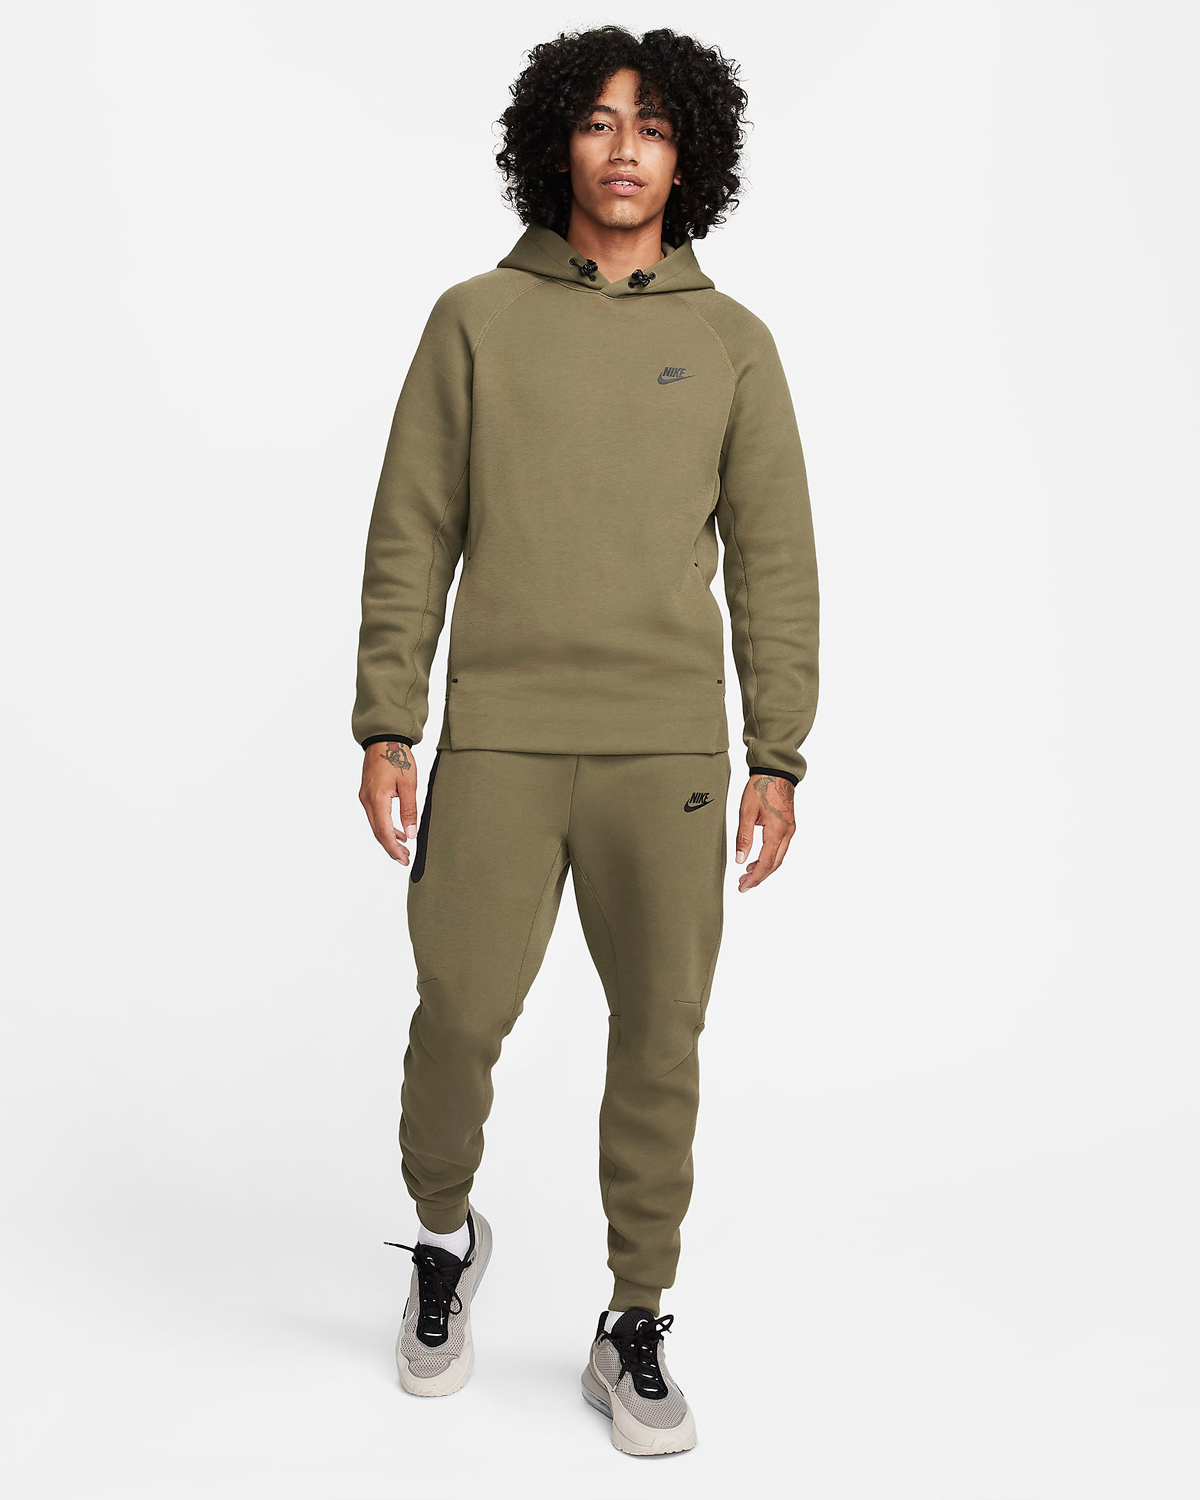 Nike-Tech-Fleece-Pullover-Hoodie-Medium-Olive-Black-Outfit